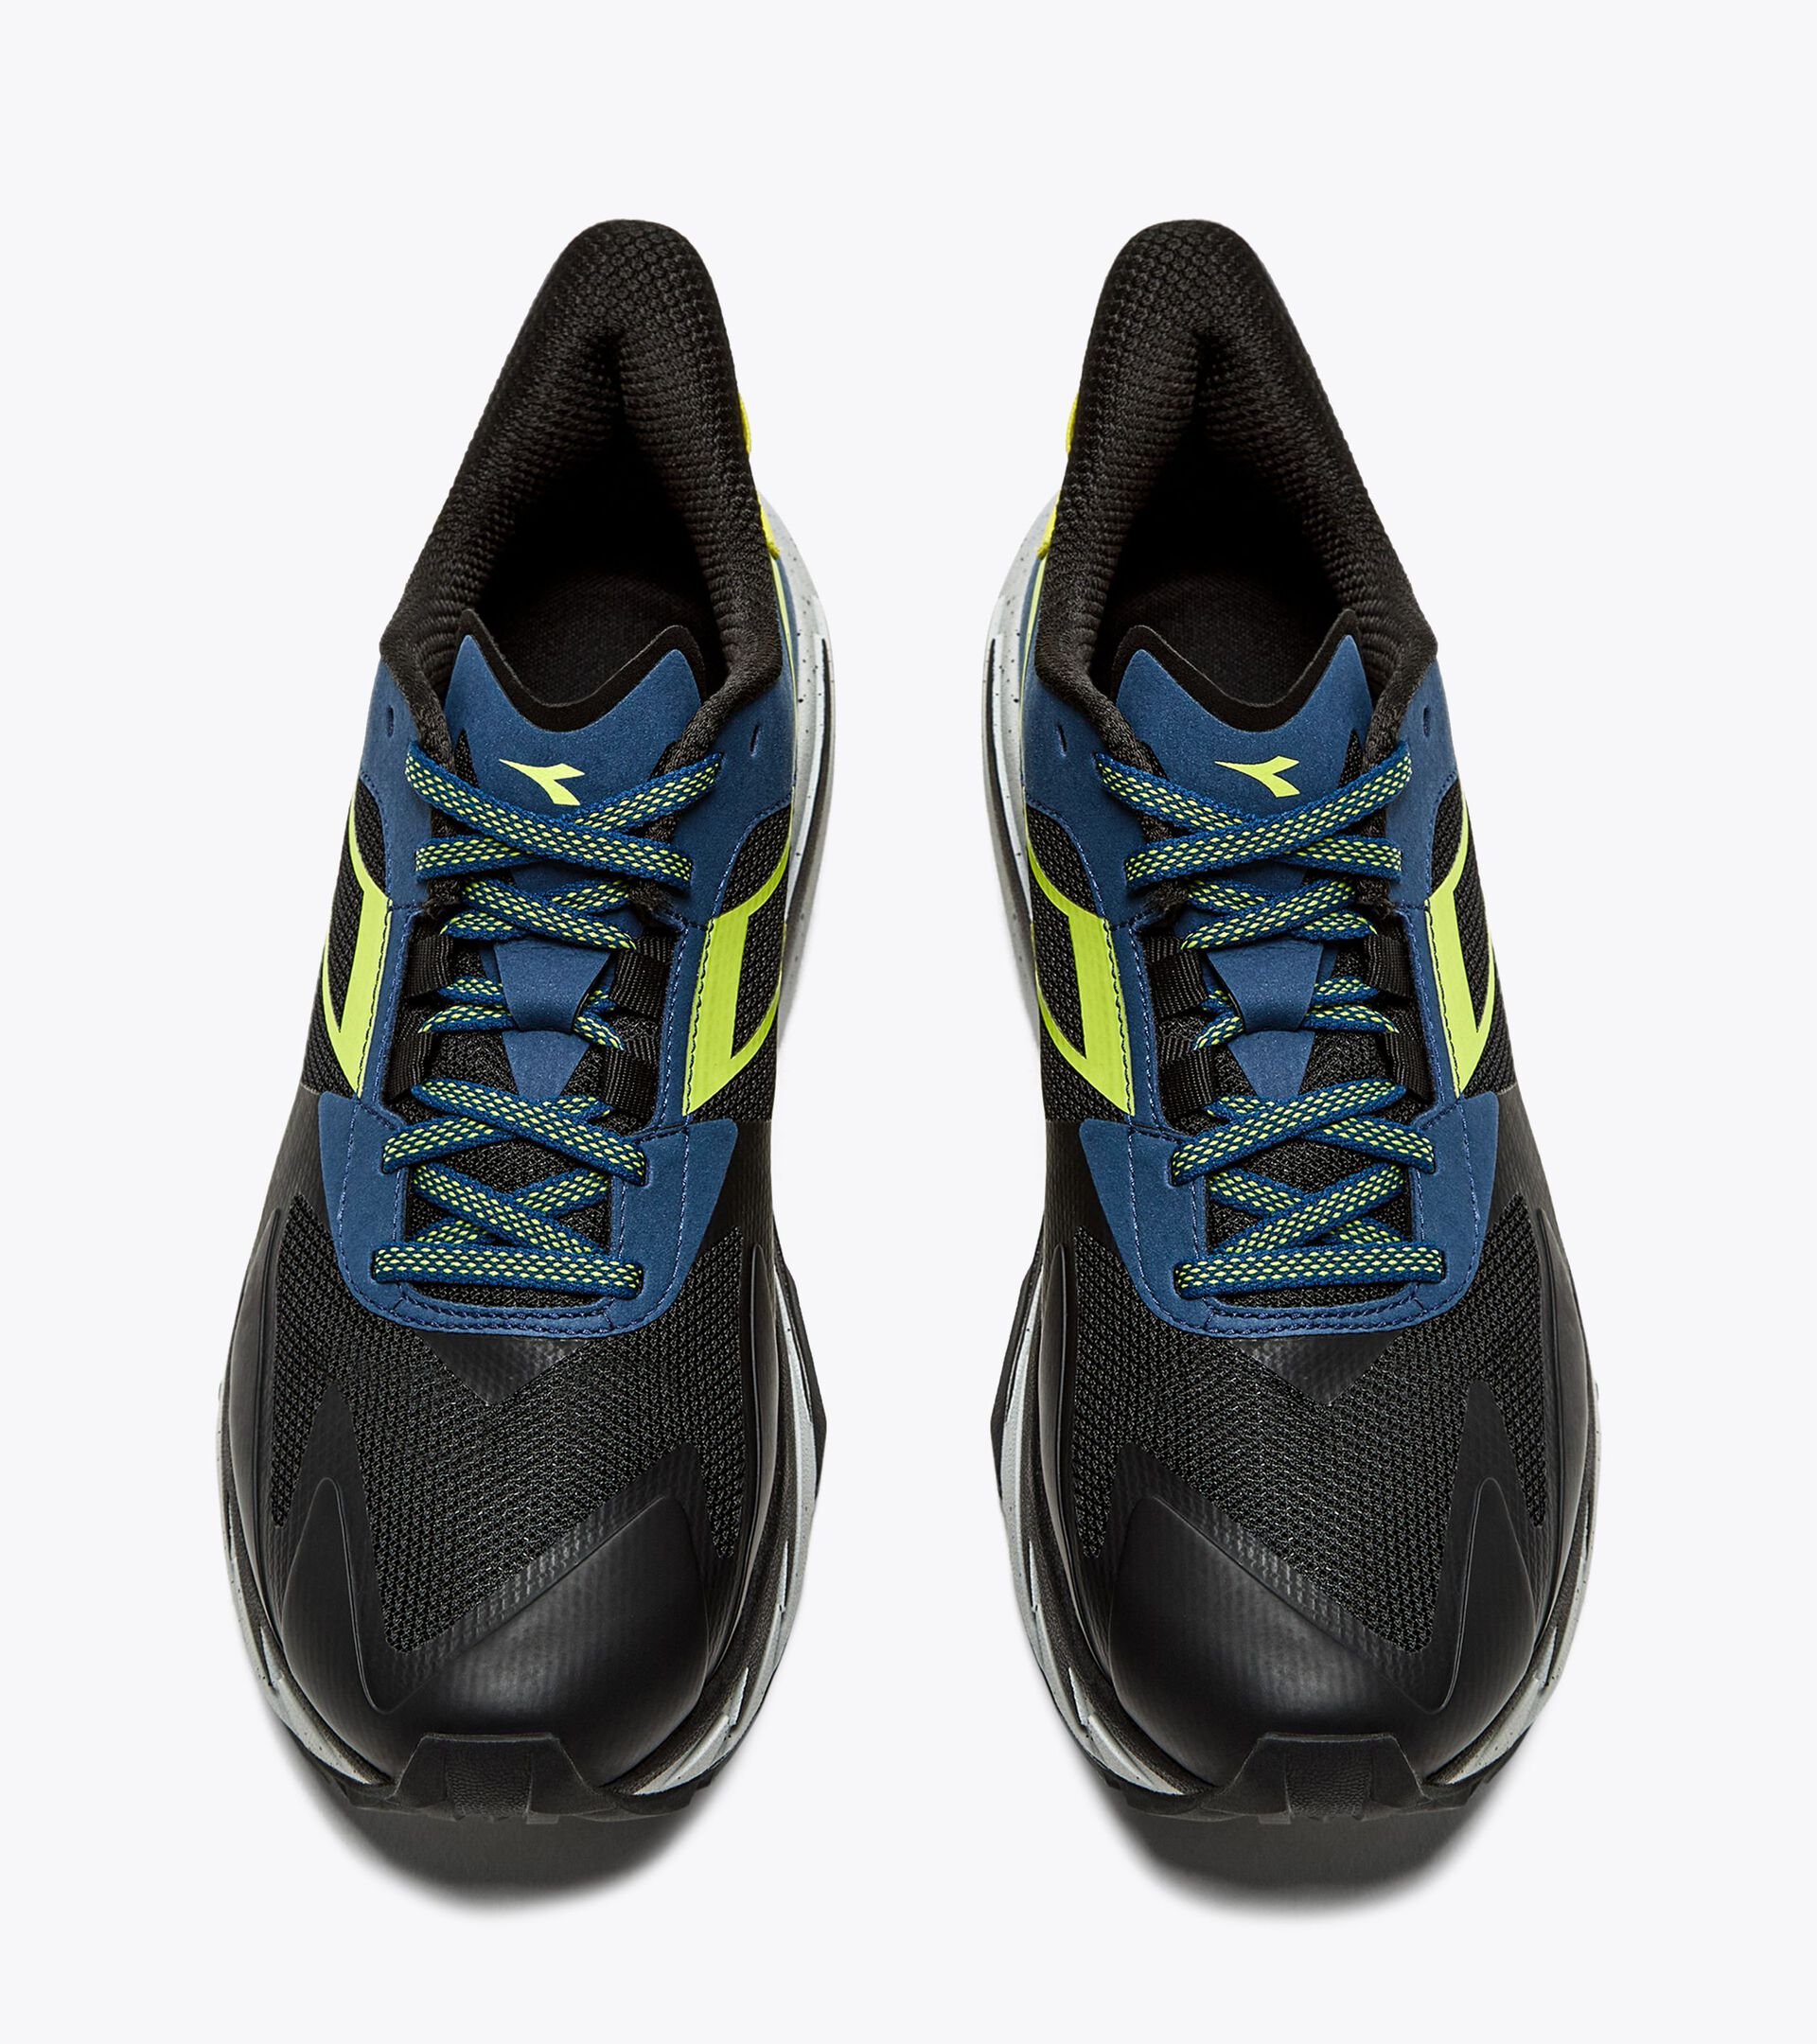 Chaussures de Trail Running – Homme EQUIPE SESTRIERE-XT NOIR/ONAGRE/ARGENT DD - Diadora